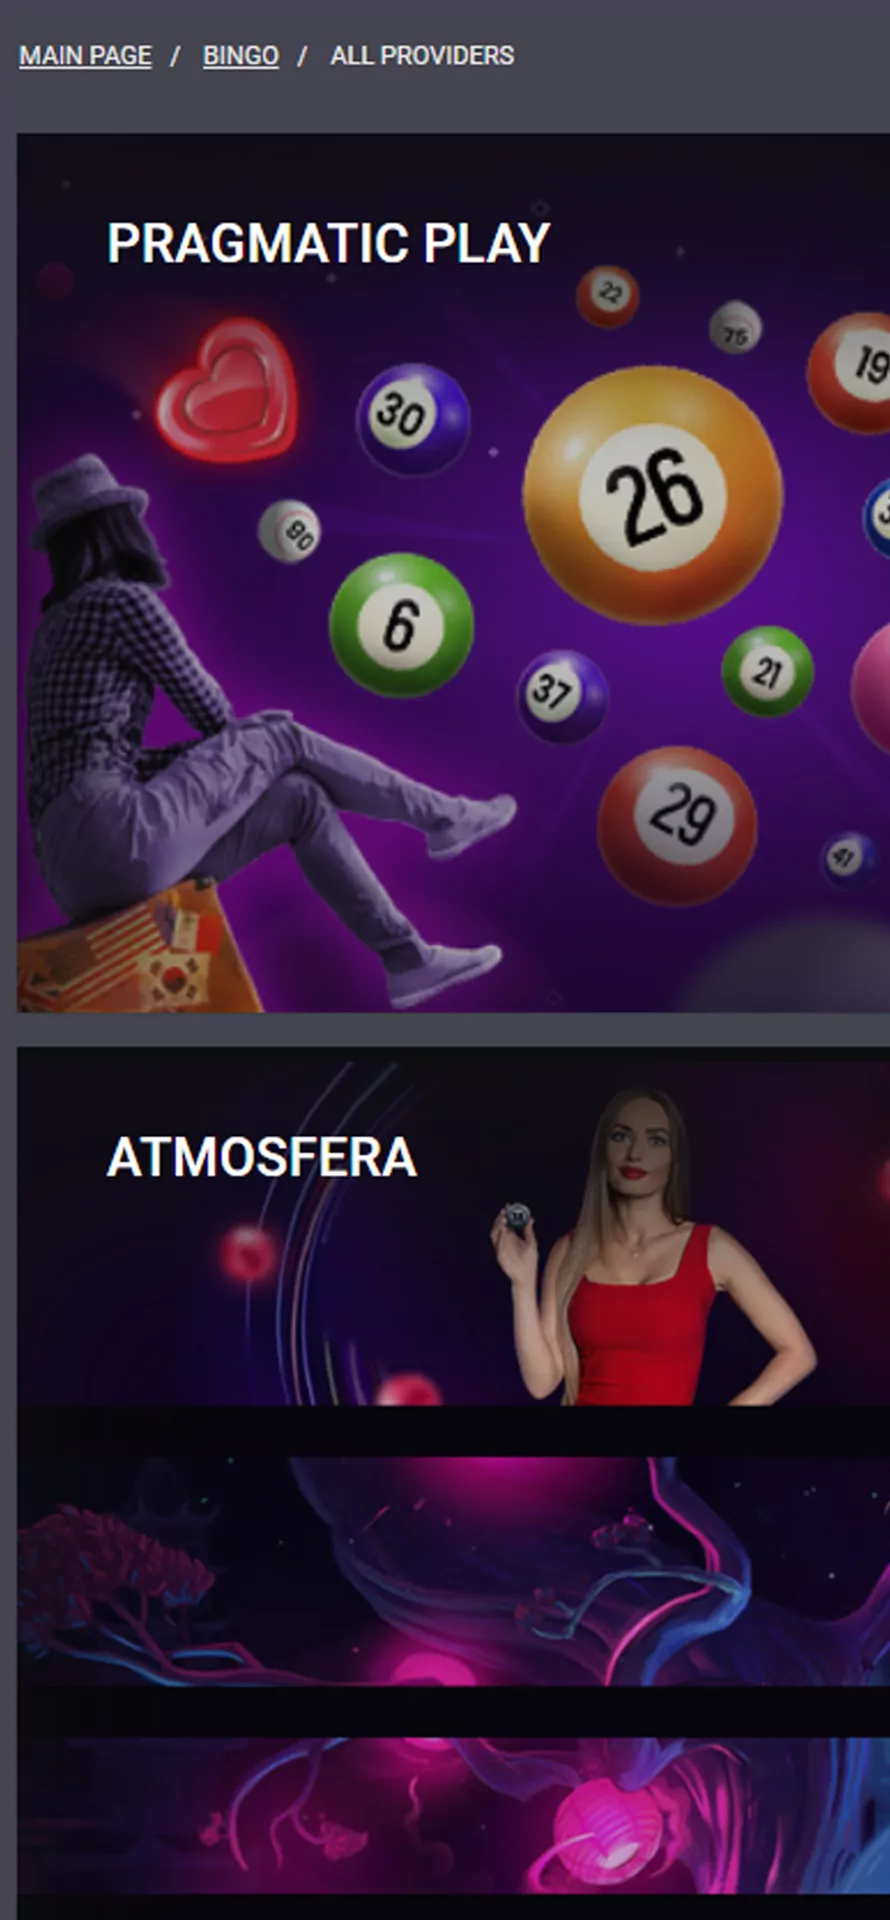 Casino games providers section in the Megapari app.